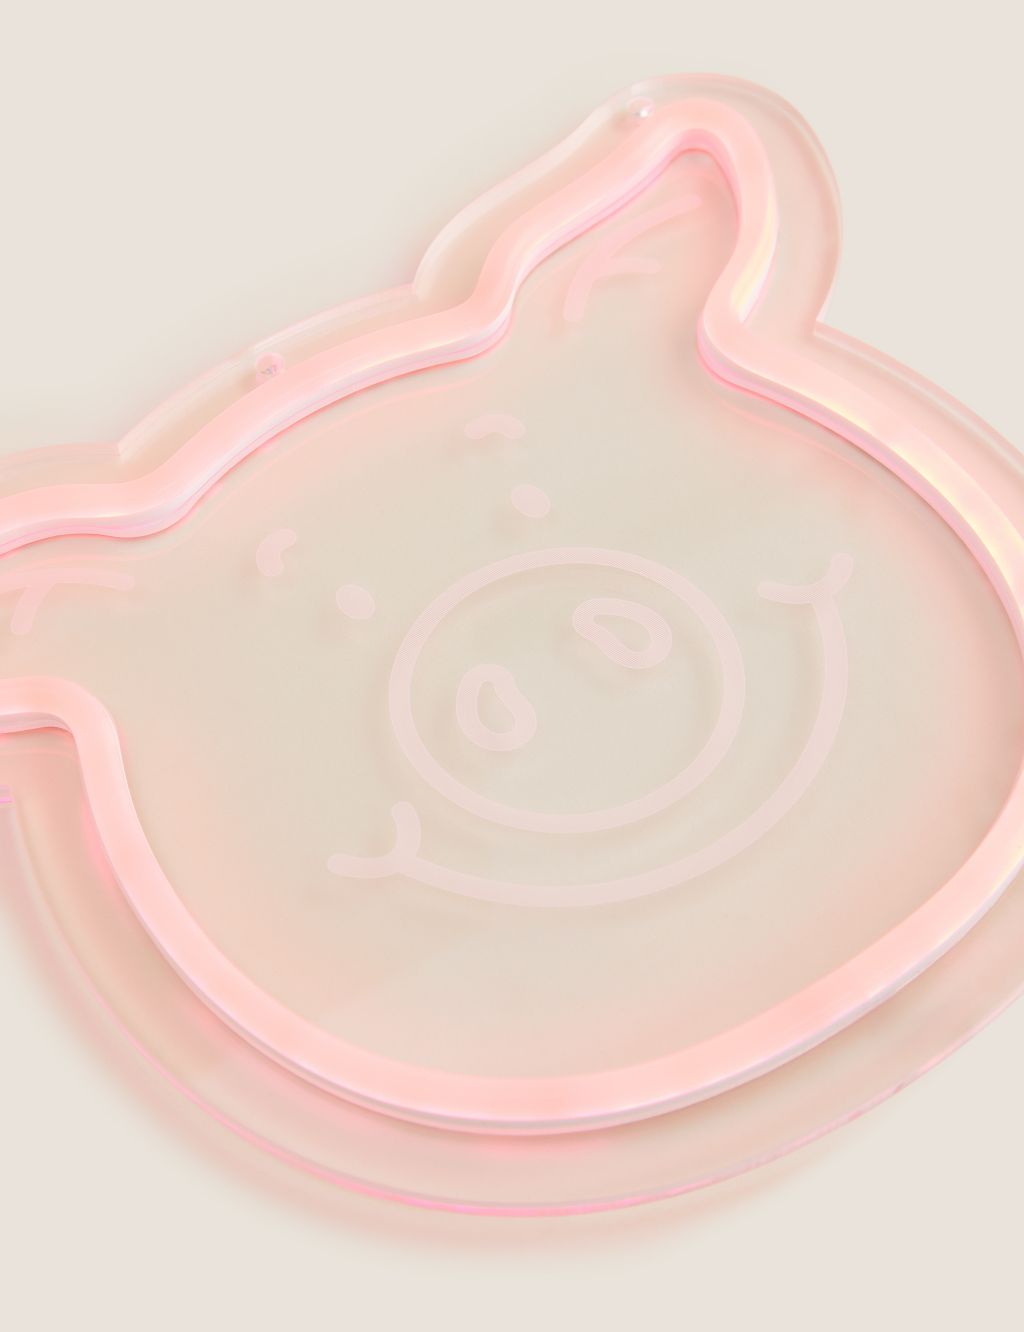 Percy Pig™ Neon Light image 2